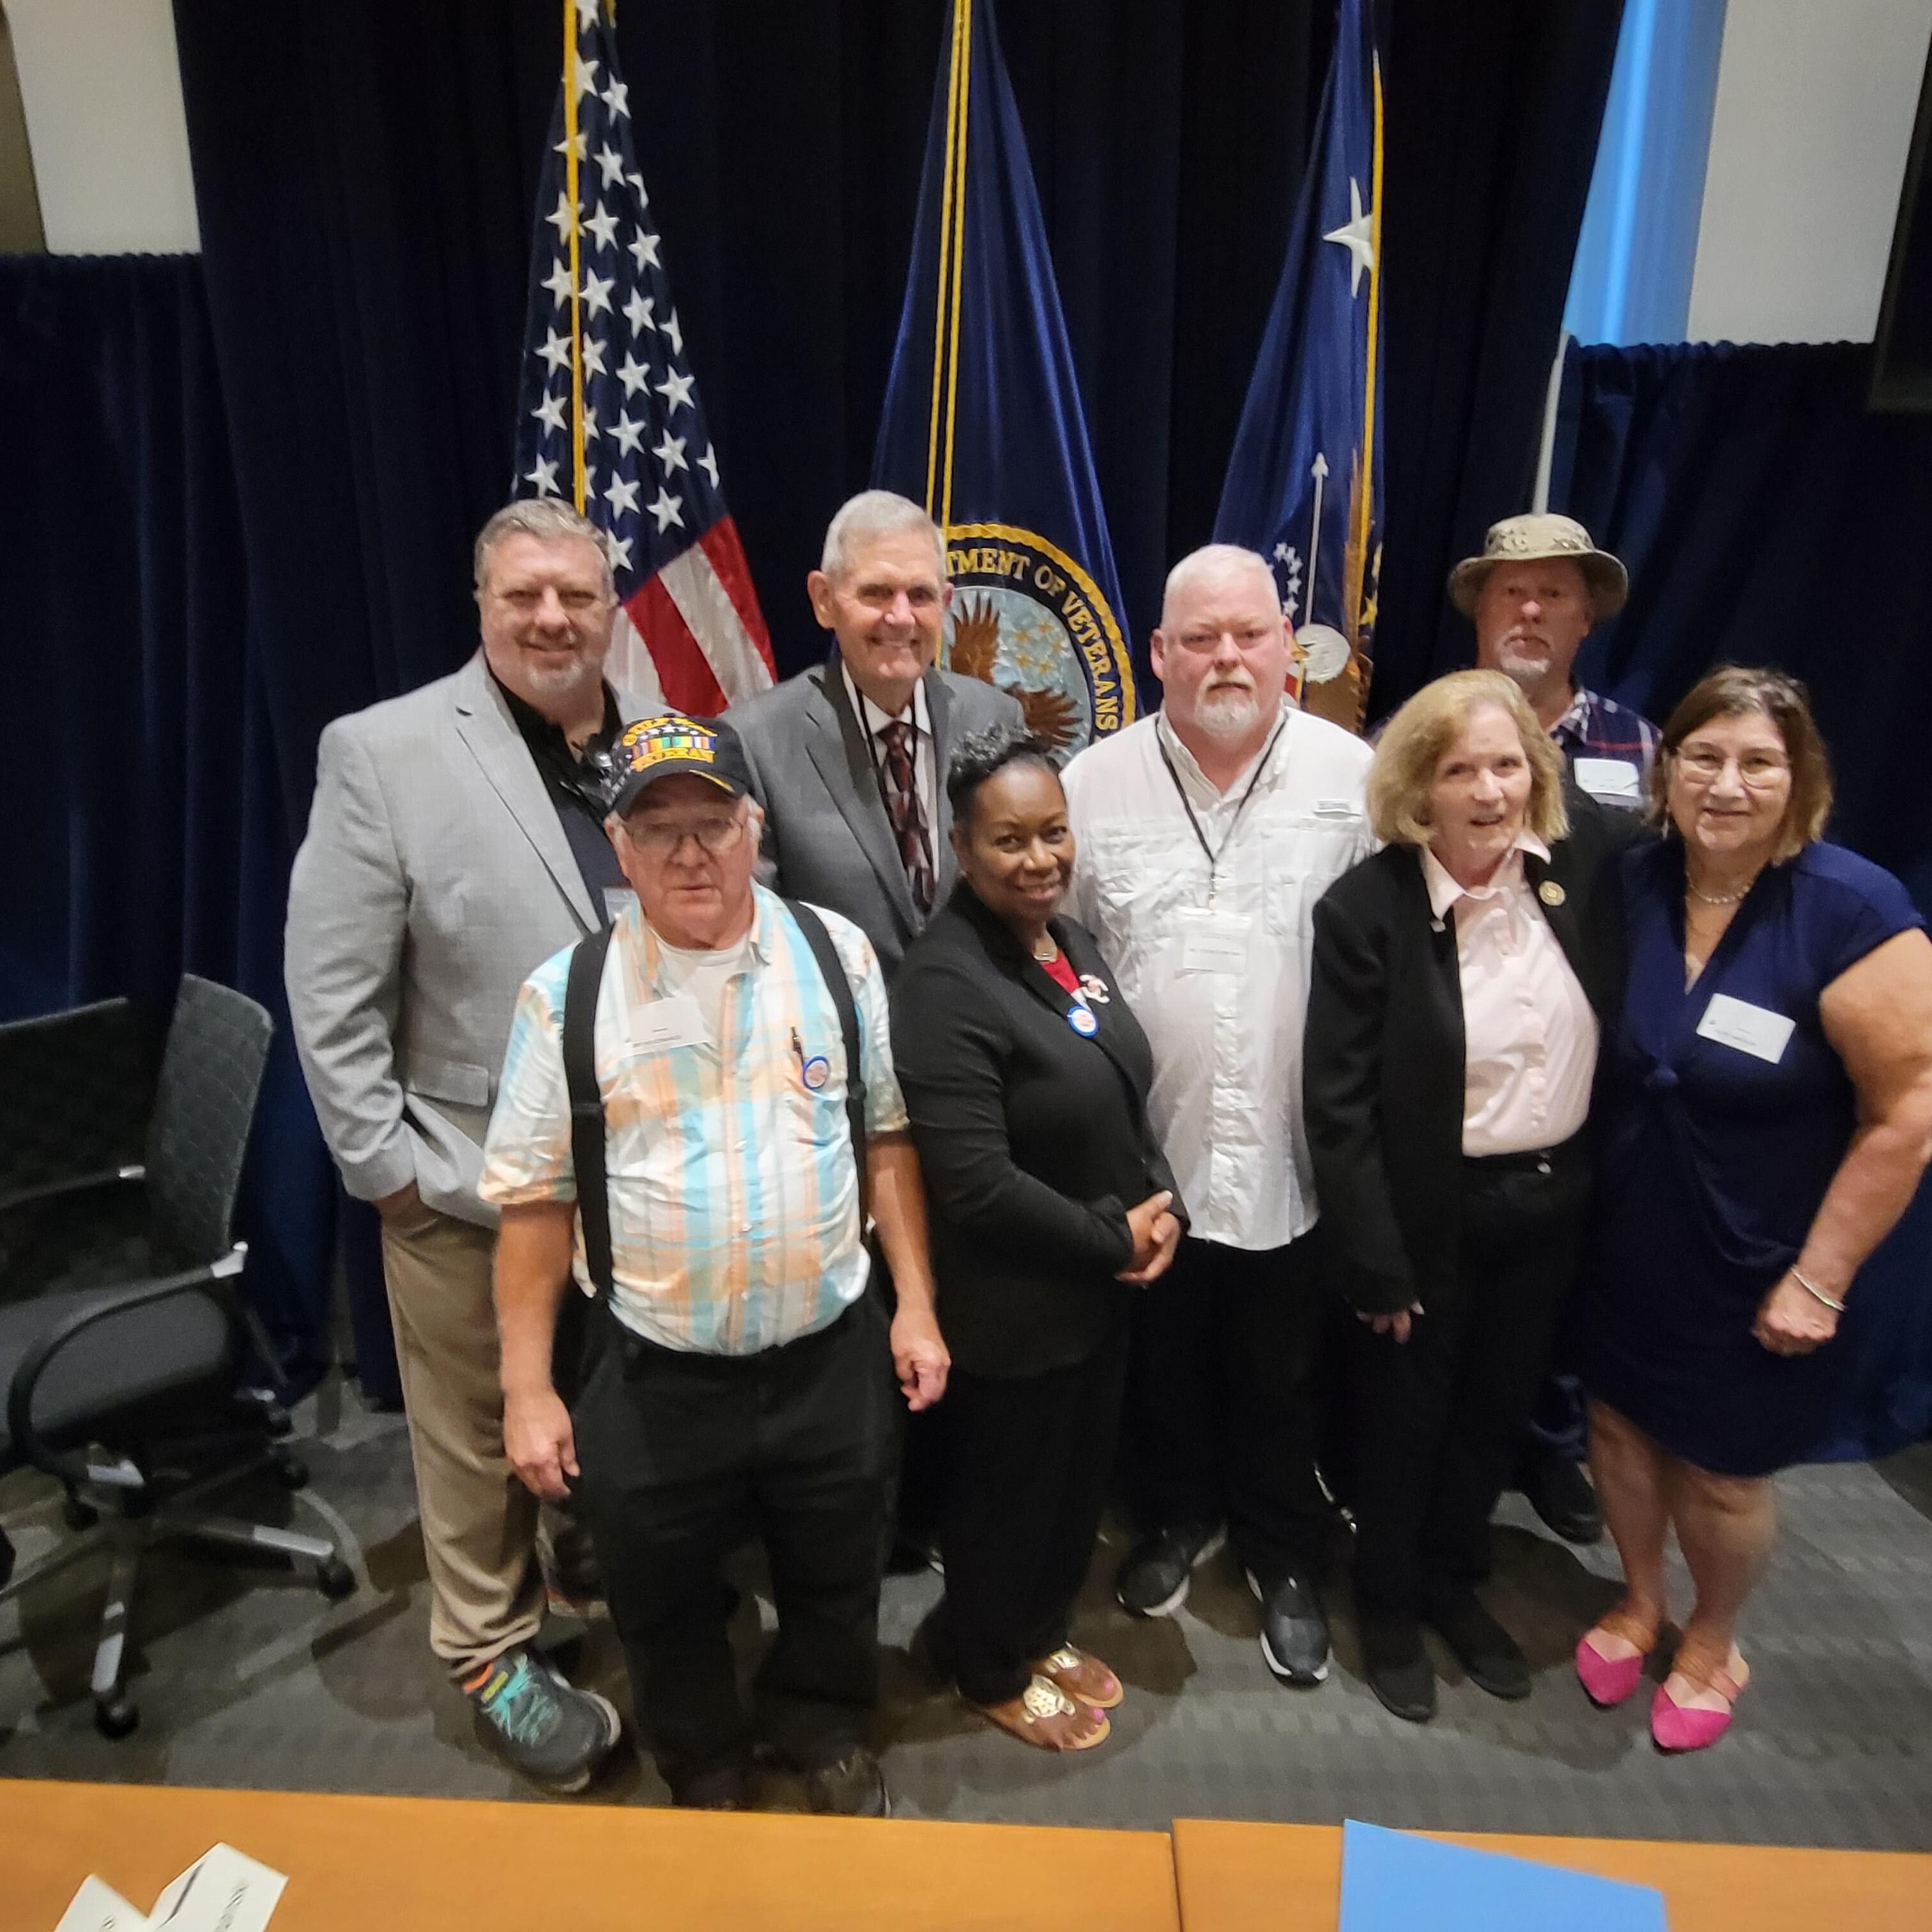 Desert Storm Veterans and Veterans of the Committee